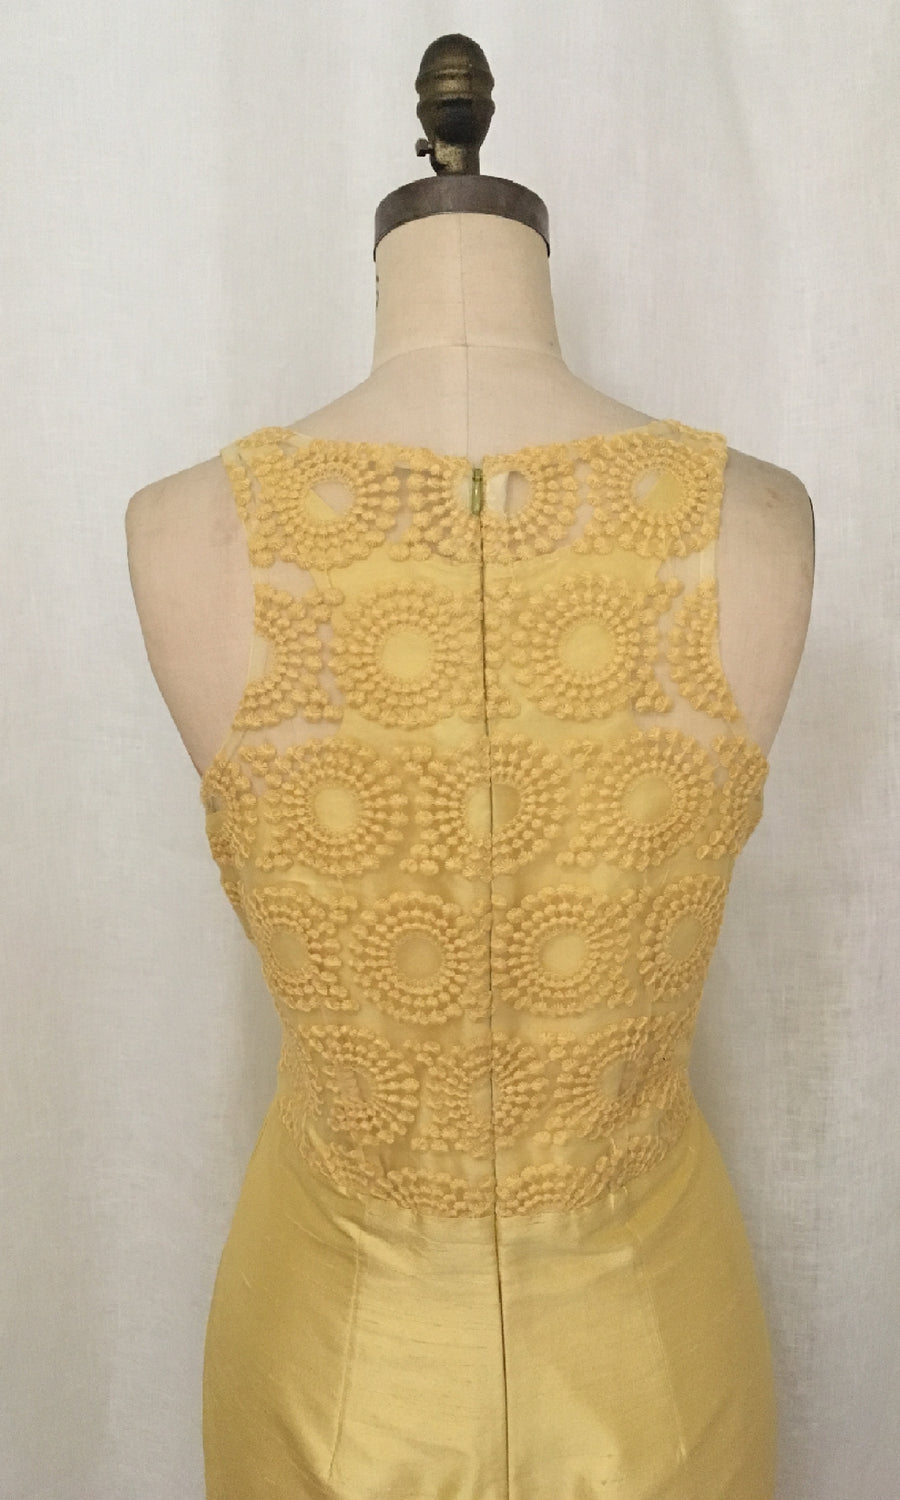 Lemon Racer-back Sheath Dress, size Small